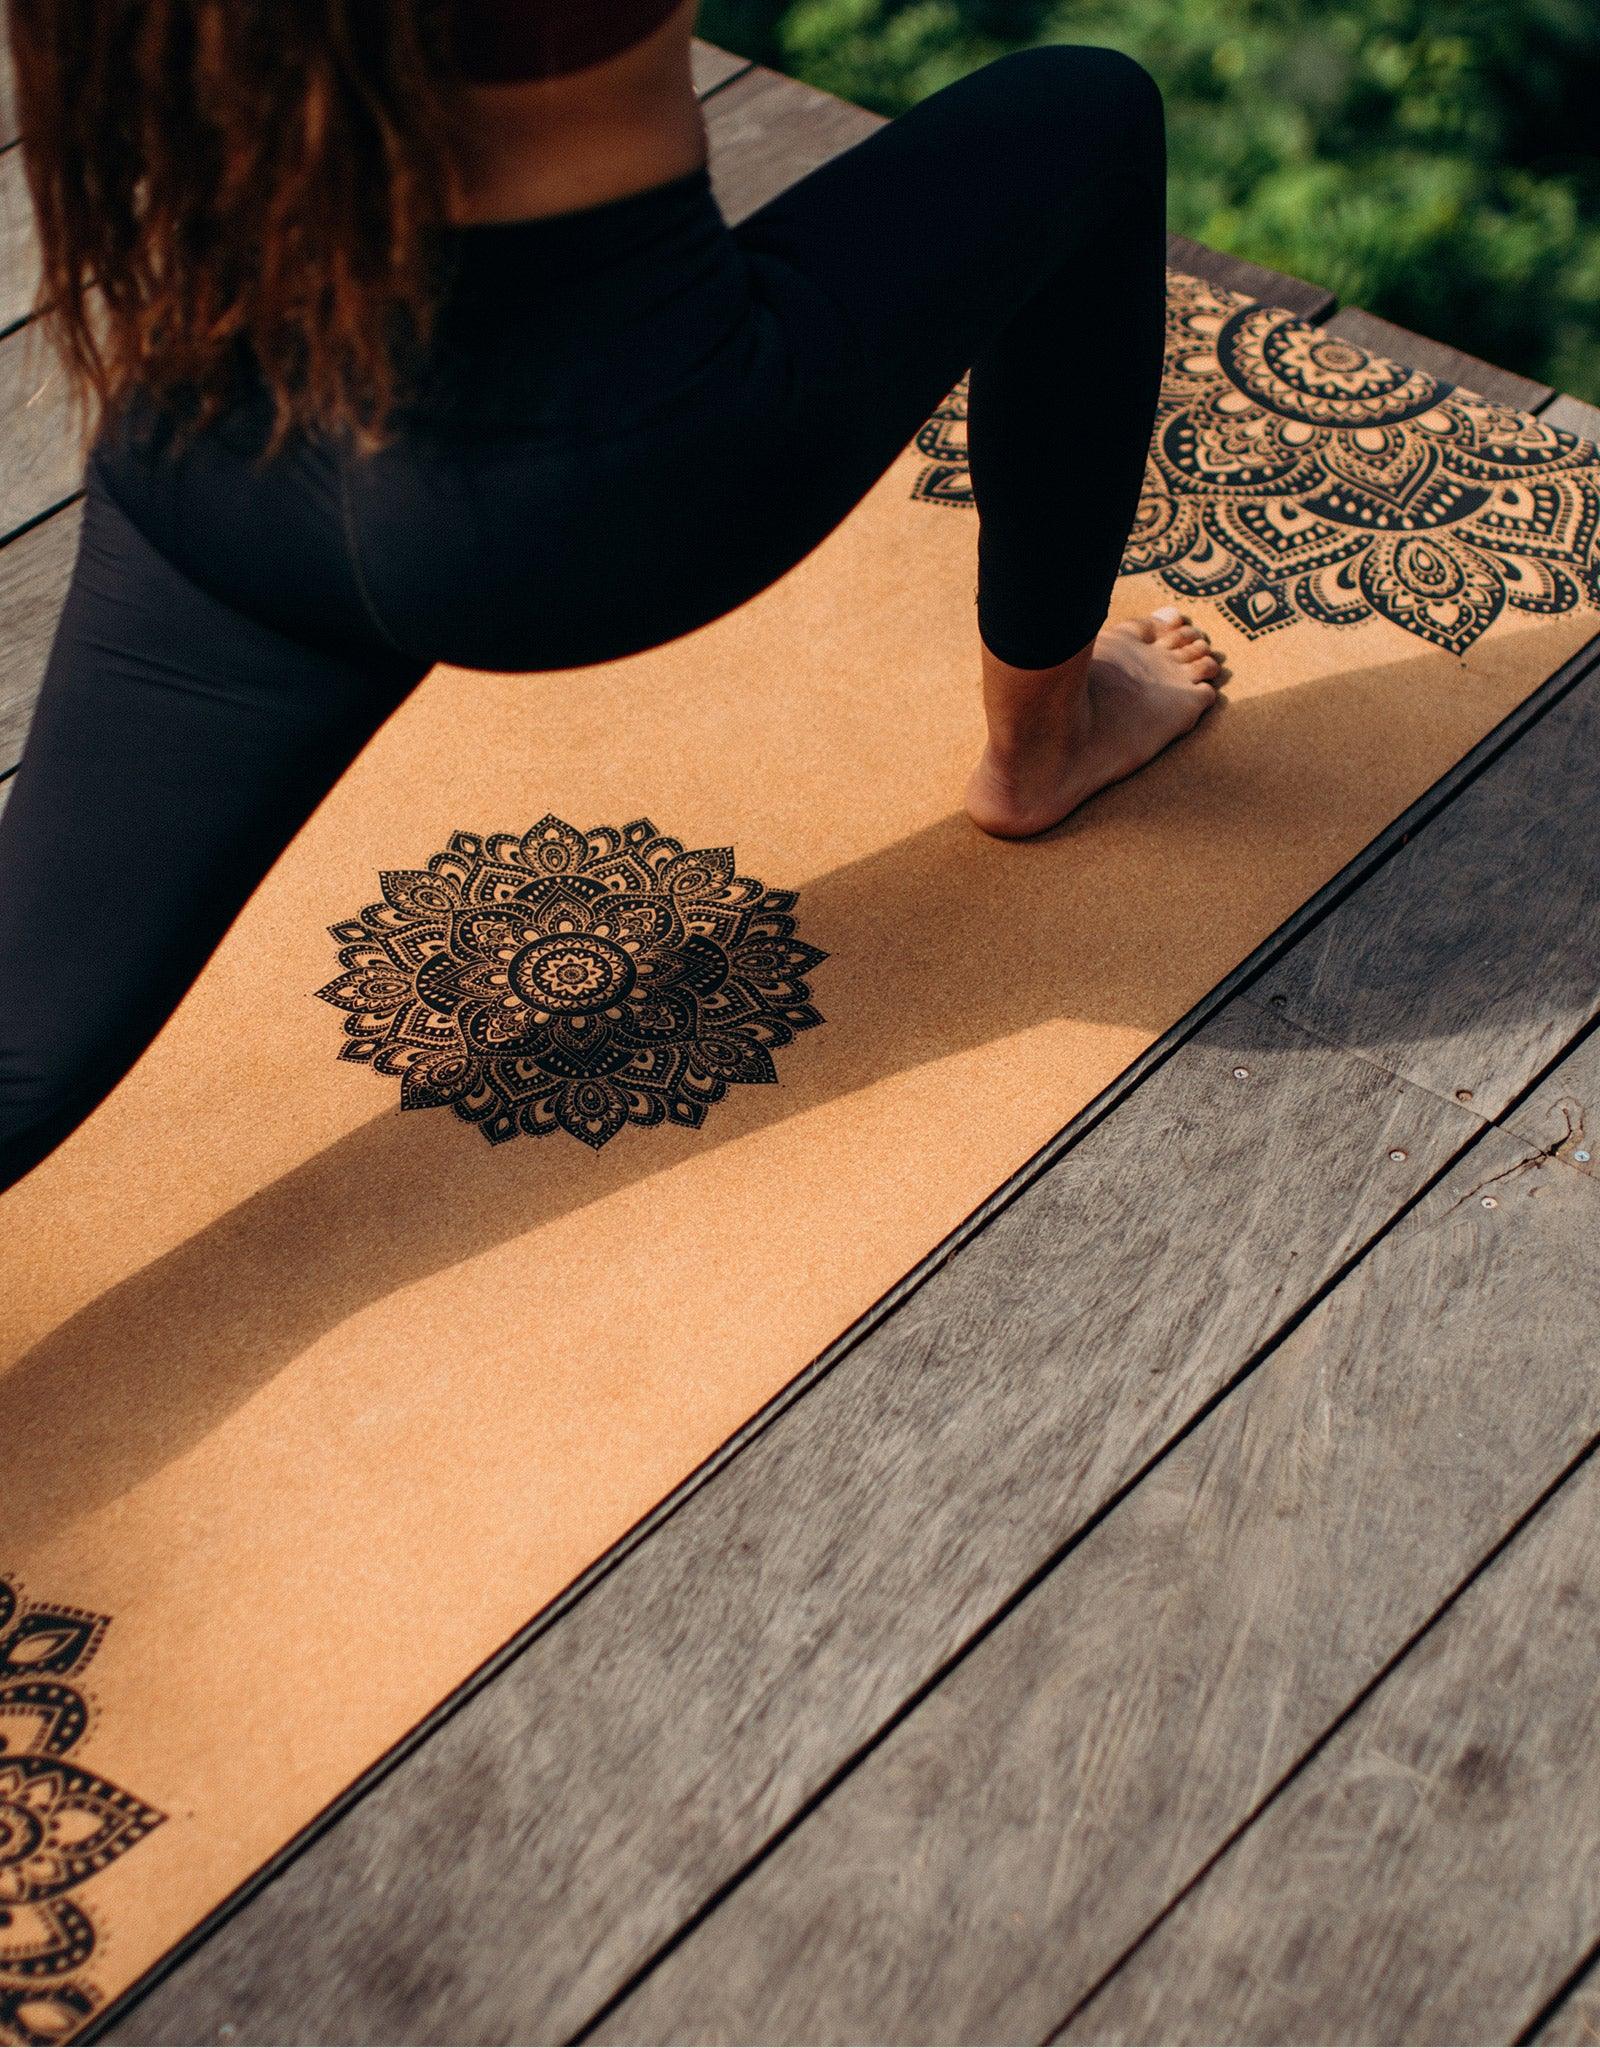 Travel Cork Yoga Mat - Mandala Black - 1.5mm for experienced yogis - Yoga Design Lab 